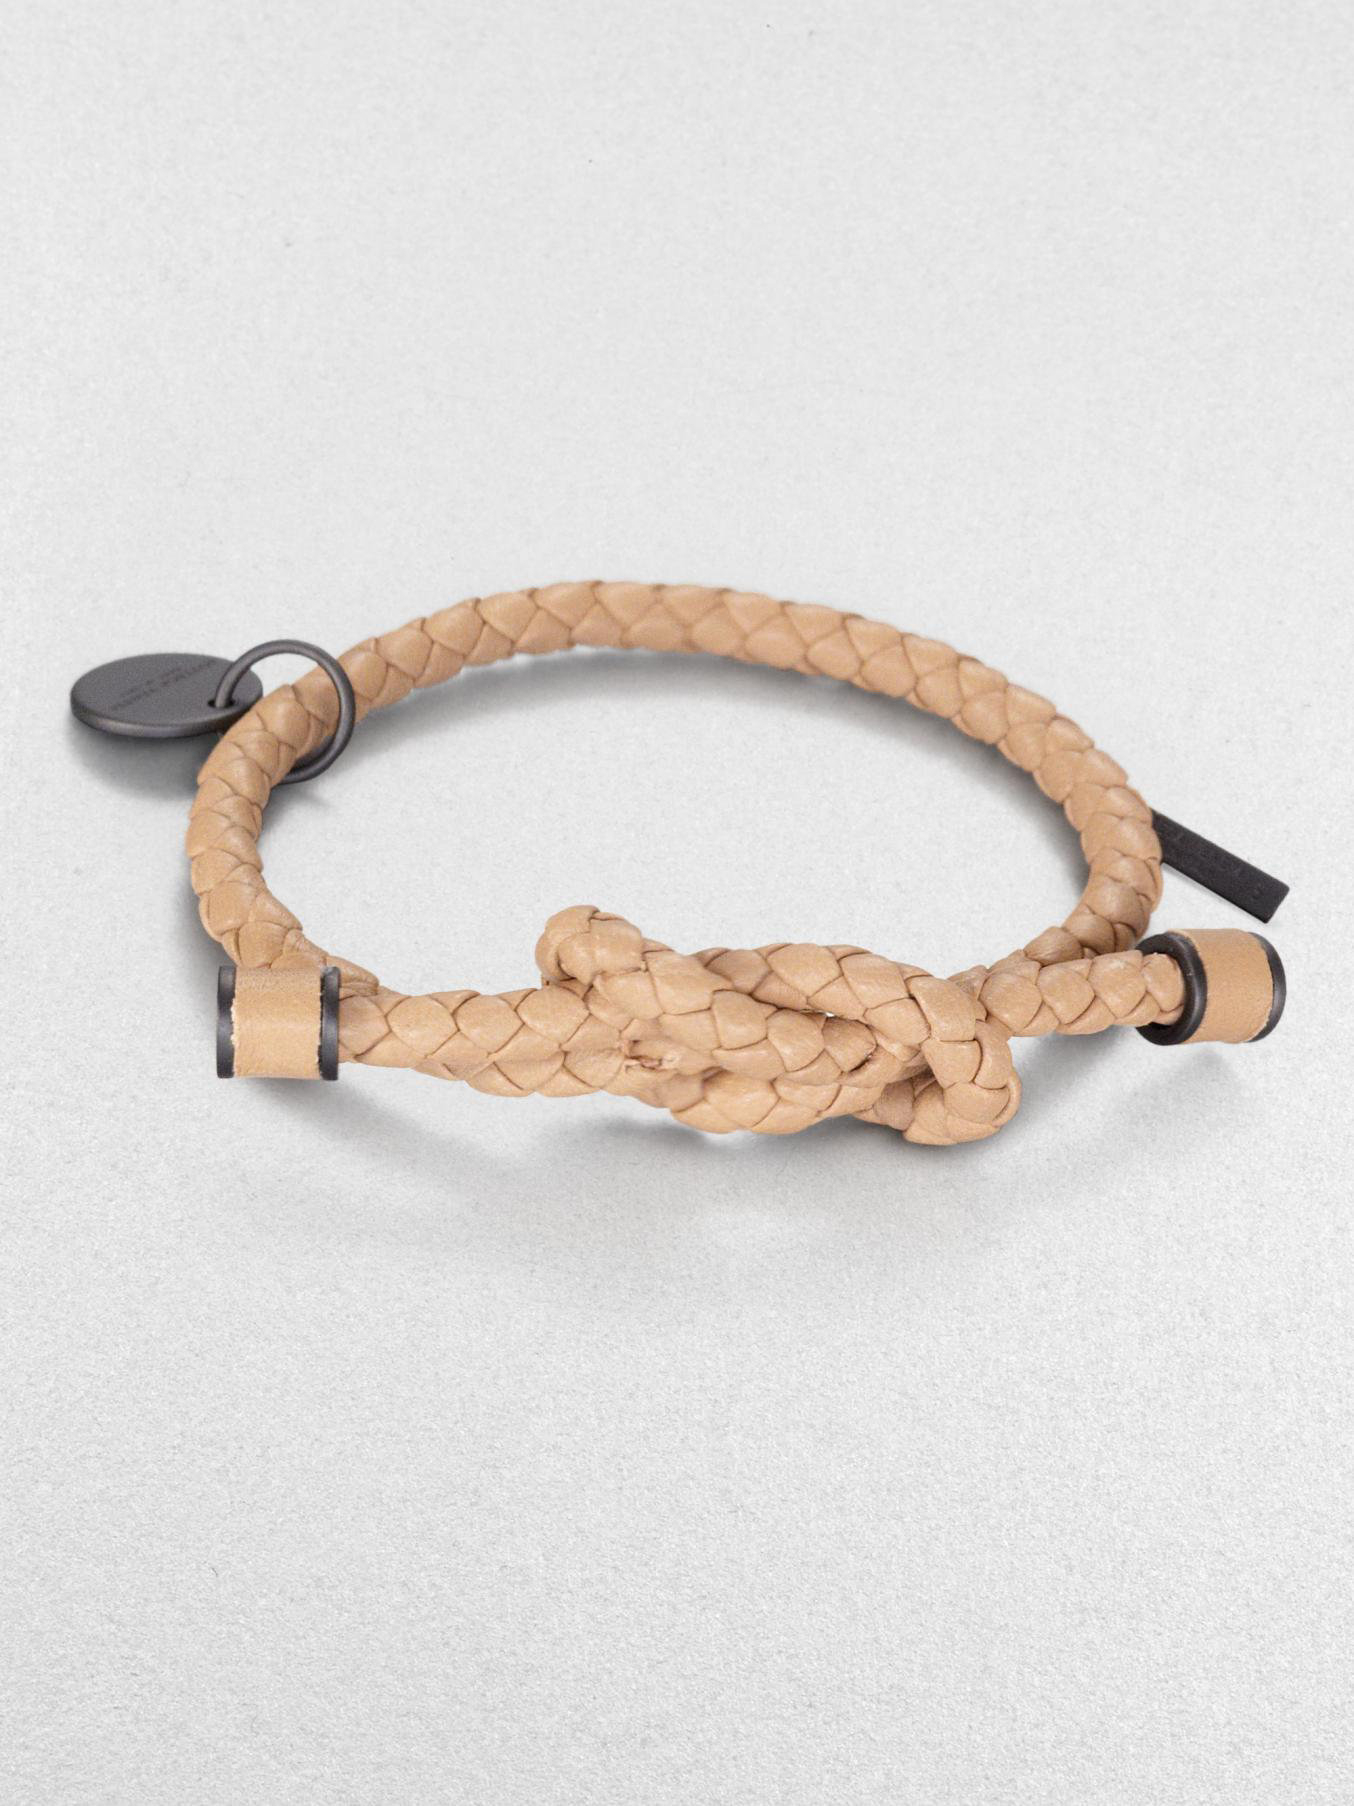 Bottega veneta Intrecciato Knotted Leather Bracelet in Natural | Lyst